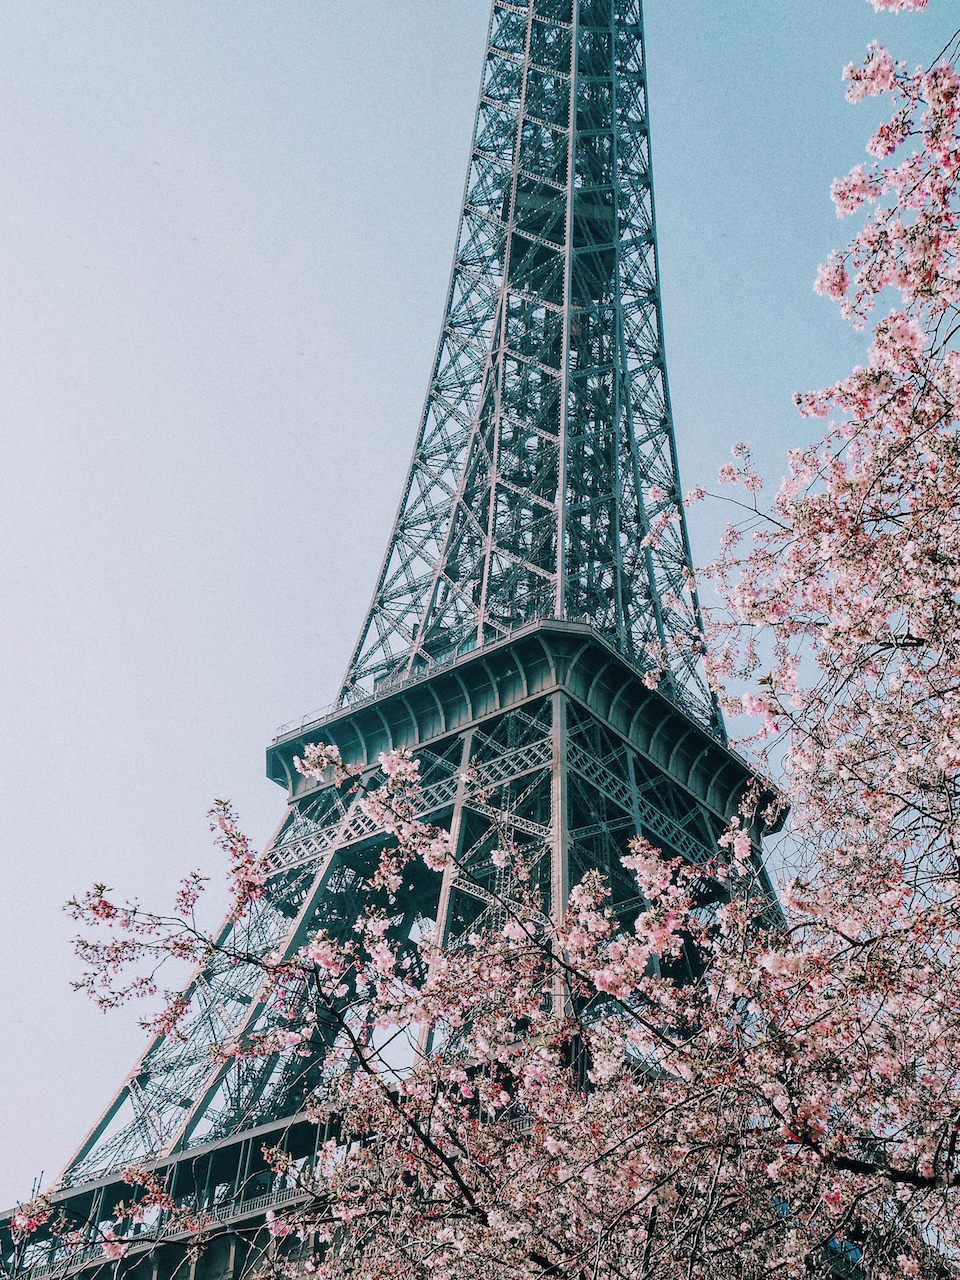 Cherry blossoms near the Eiffel Tower - Paris - France